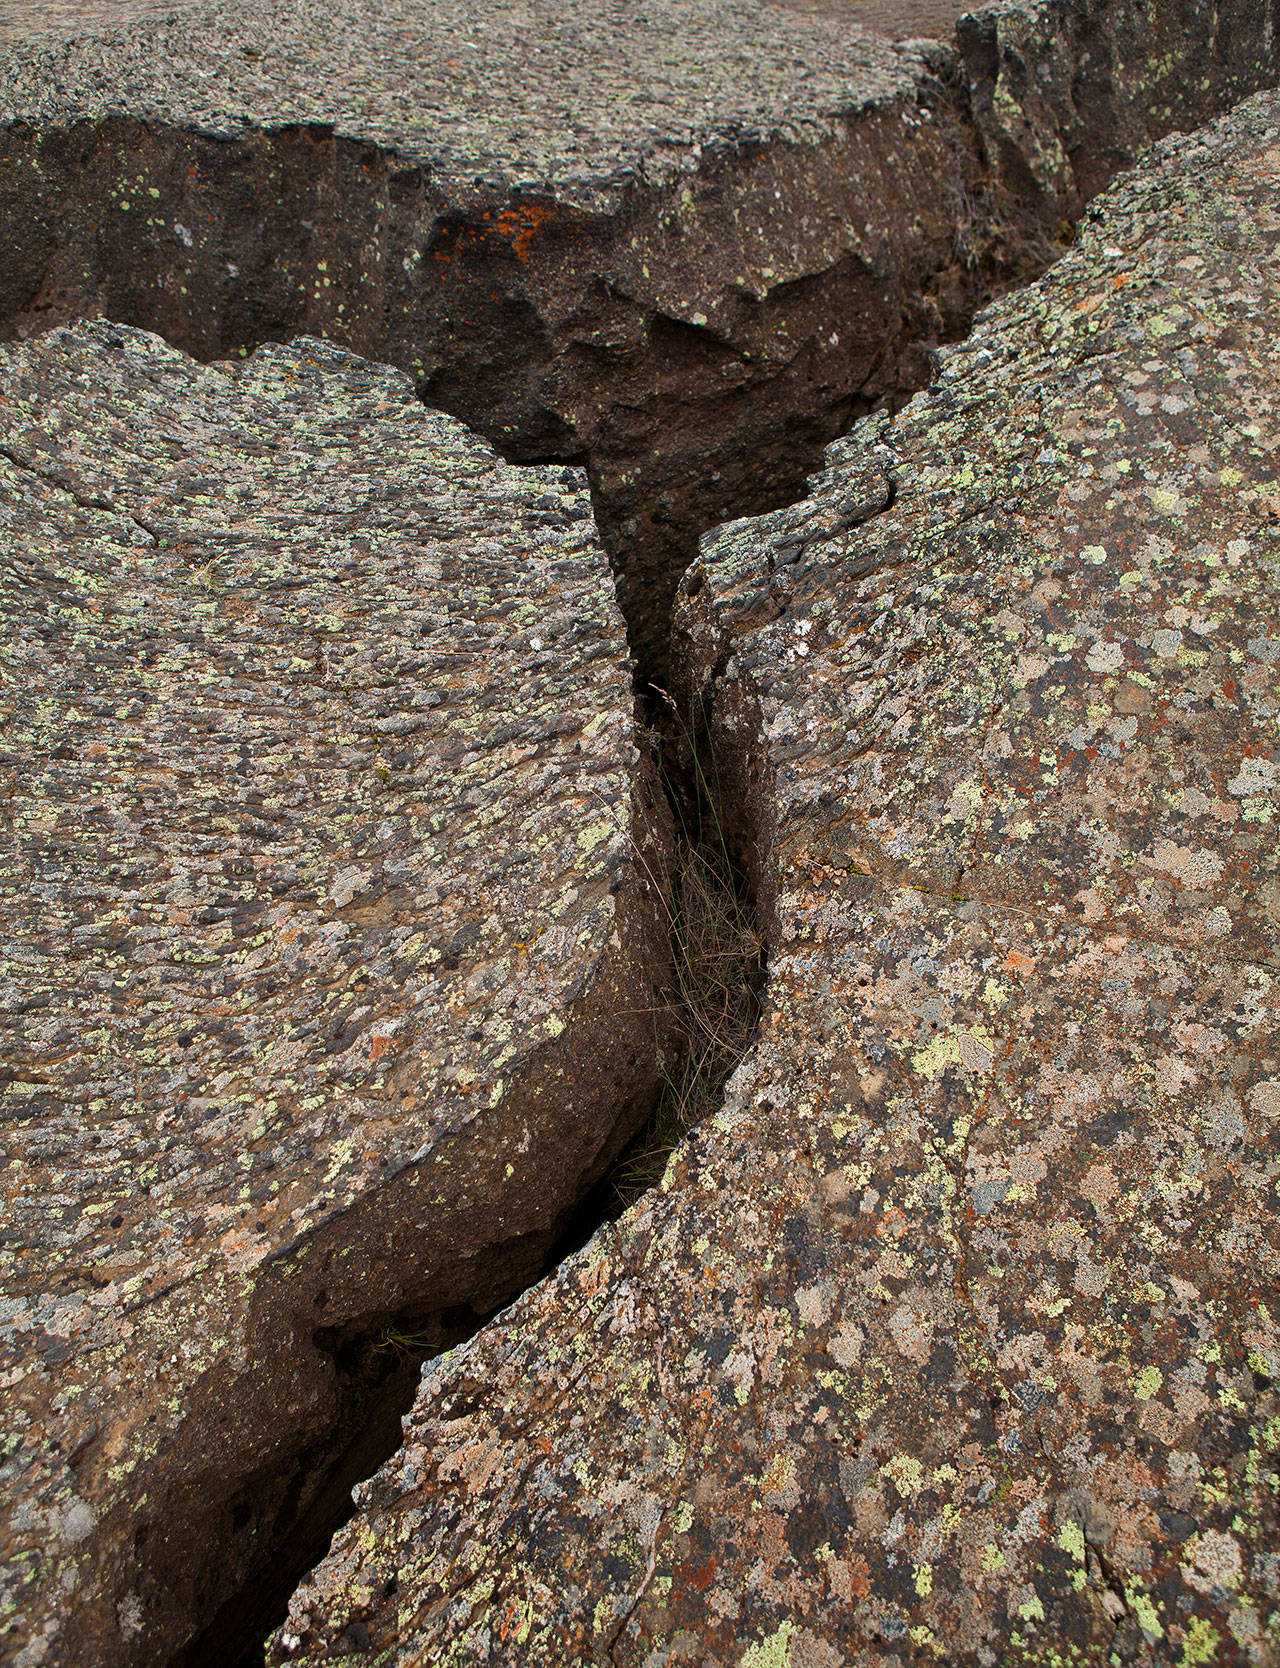 Earthquake cracks in lava, lichen on top. Photo courtesy of The Herald